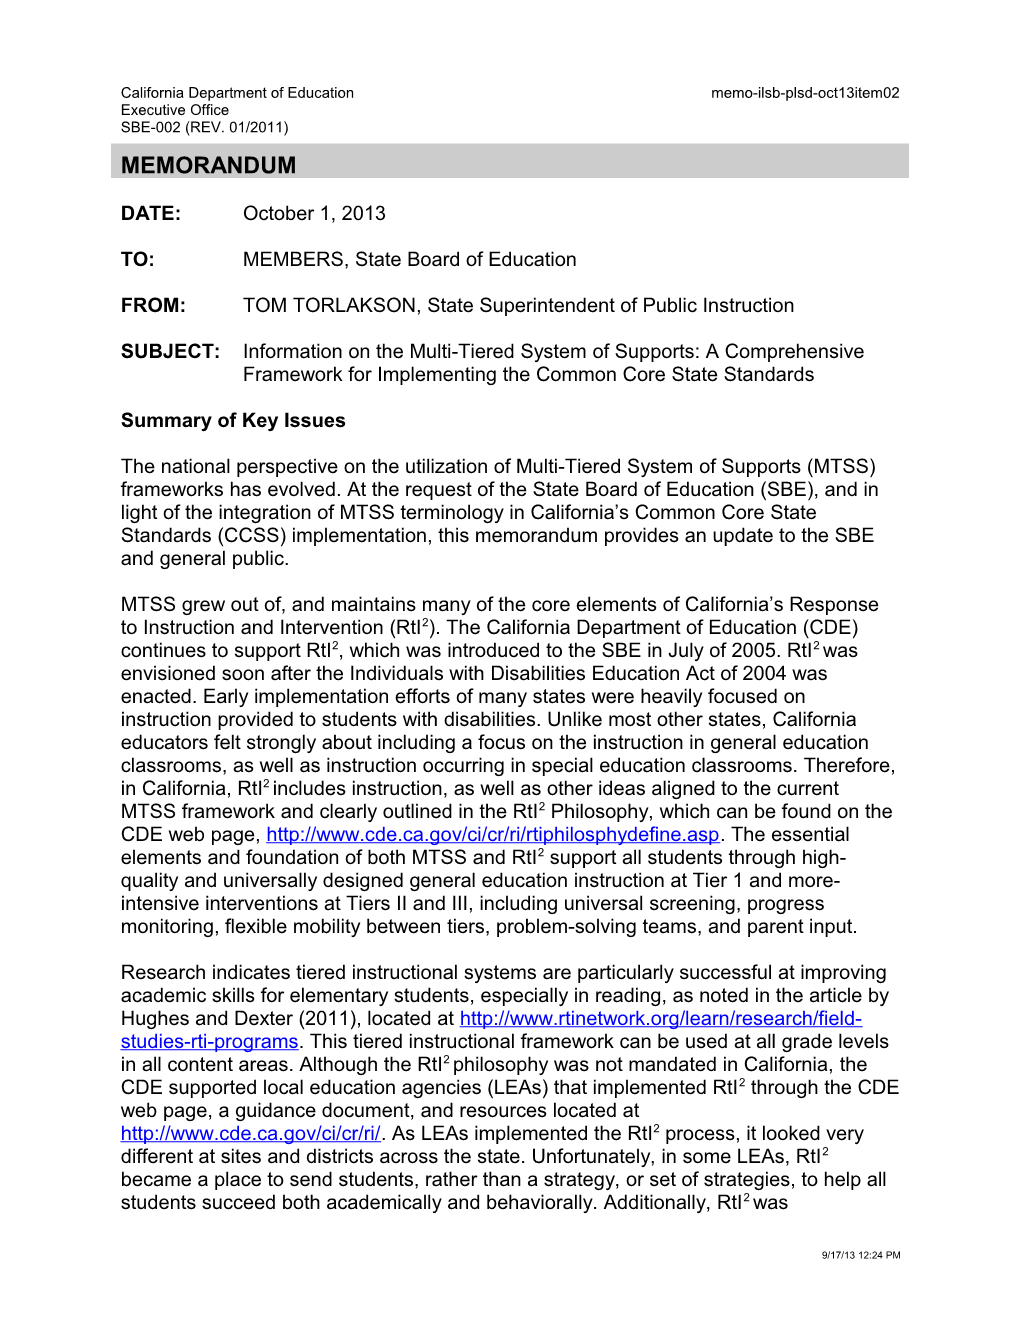 October 2013 Memorandum PLSD Item 02 - Information Memorandum (CA State Board of Education)